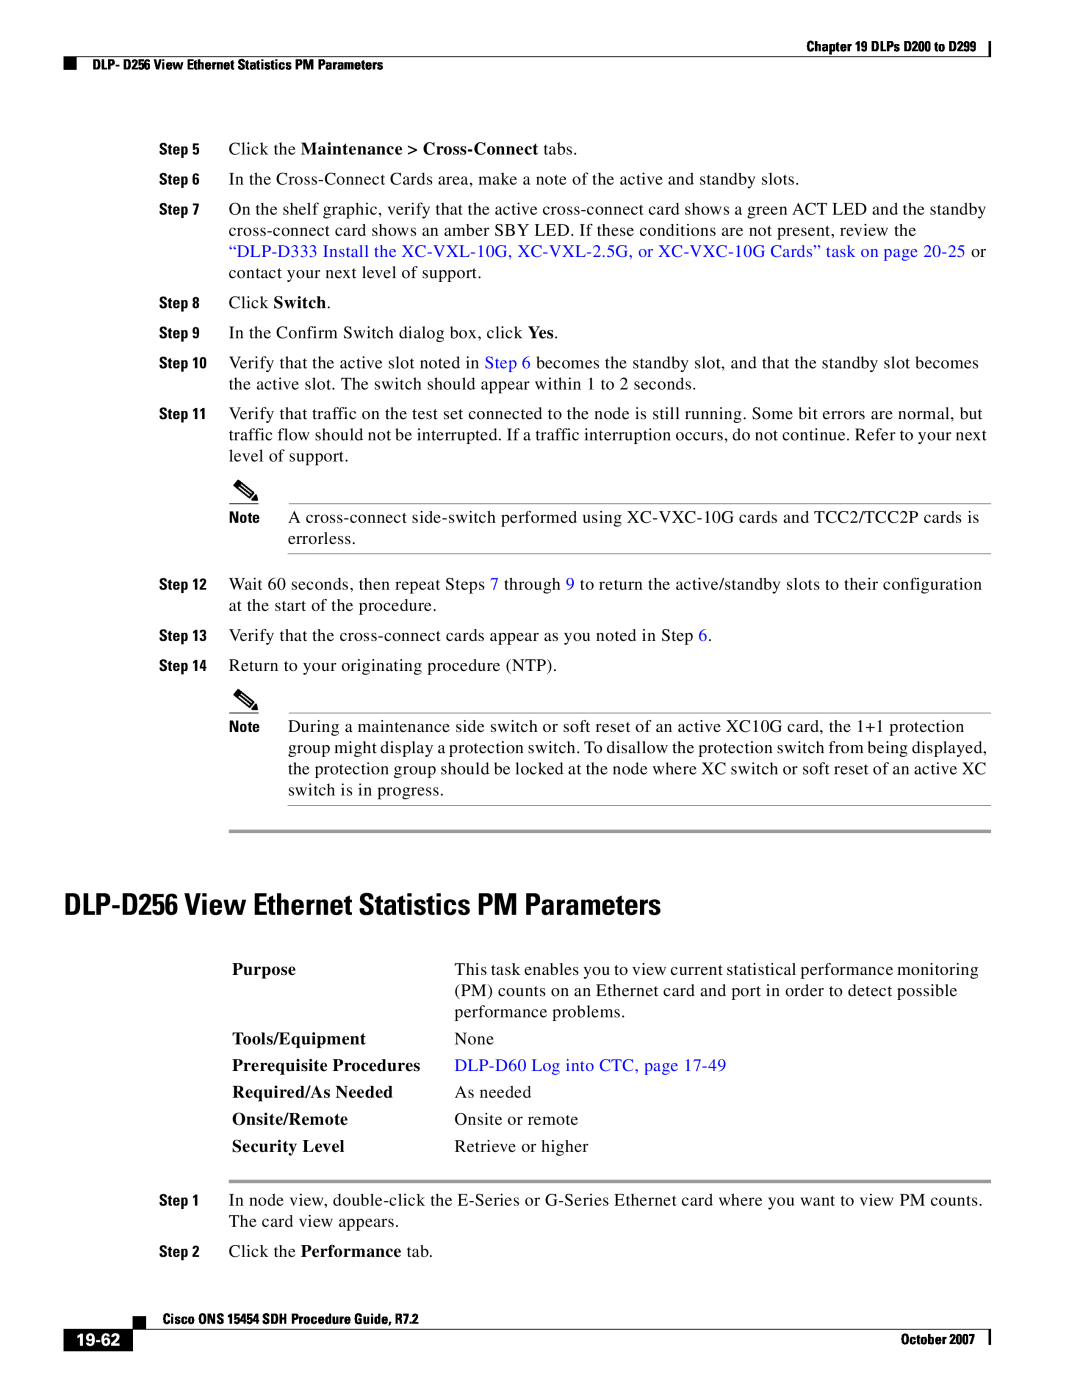 Cisco Systems D200 manual DLP-D256 View Ethernet Statistics PM Parameters, 19-62, DLP-D60 Log into CTC, page, Click Switch 